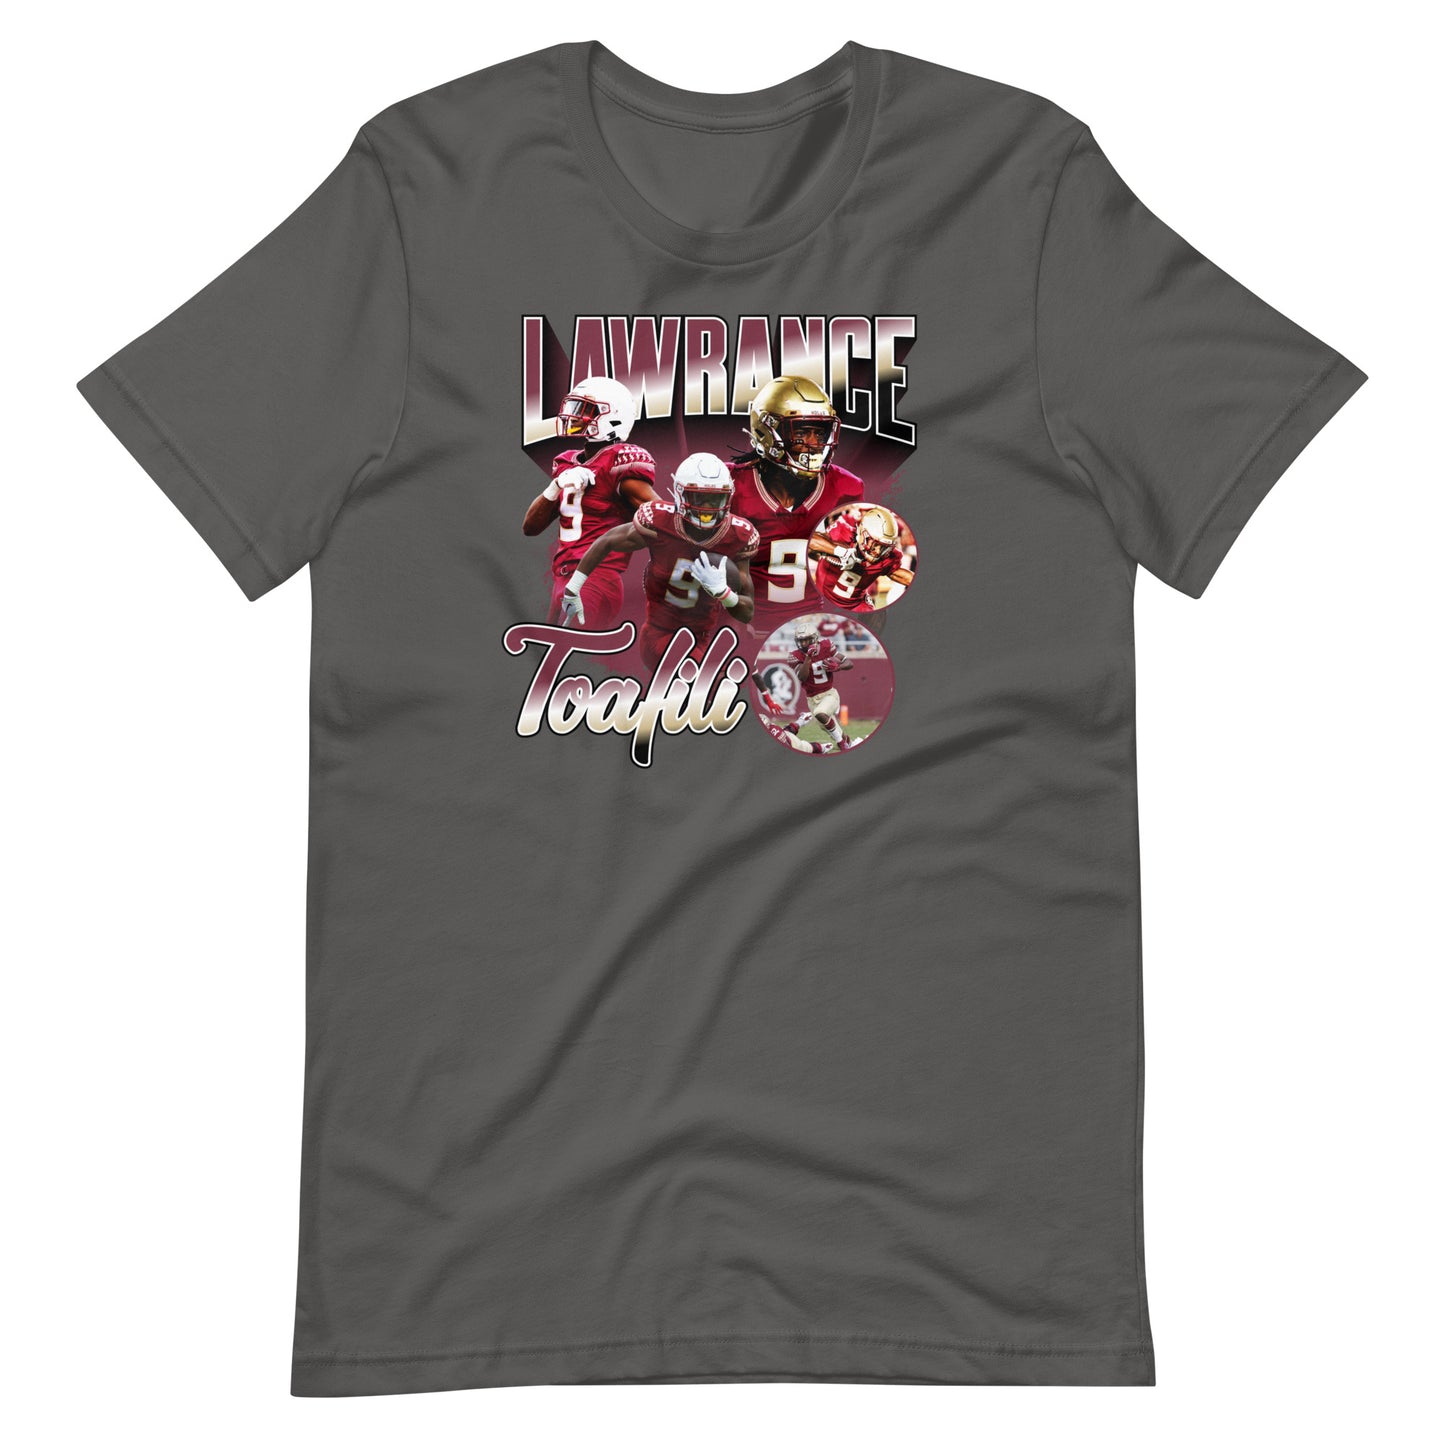 Lawrance Toafili "Vintage" t-shirt - Fan Arch